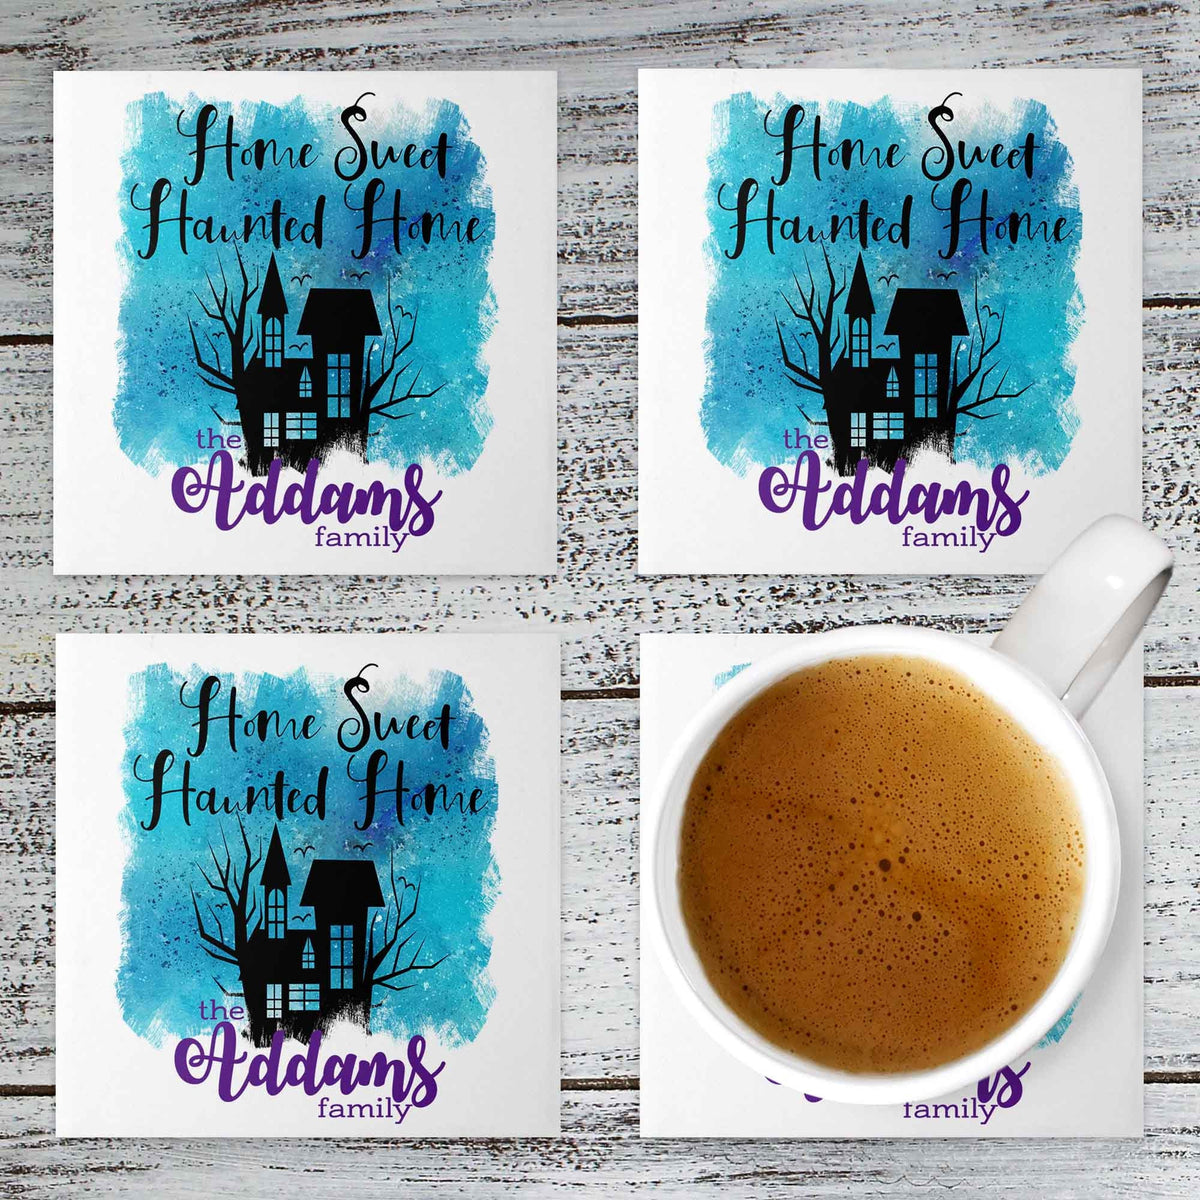 Personalized Coasters | Custom Stone Coaster Set | Home Sweet Haunted Home | Set of 4